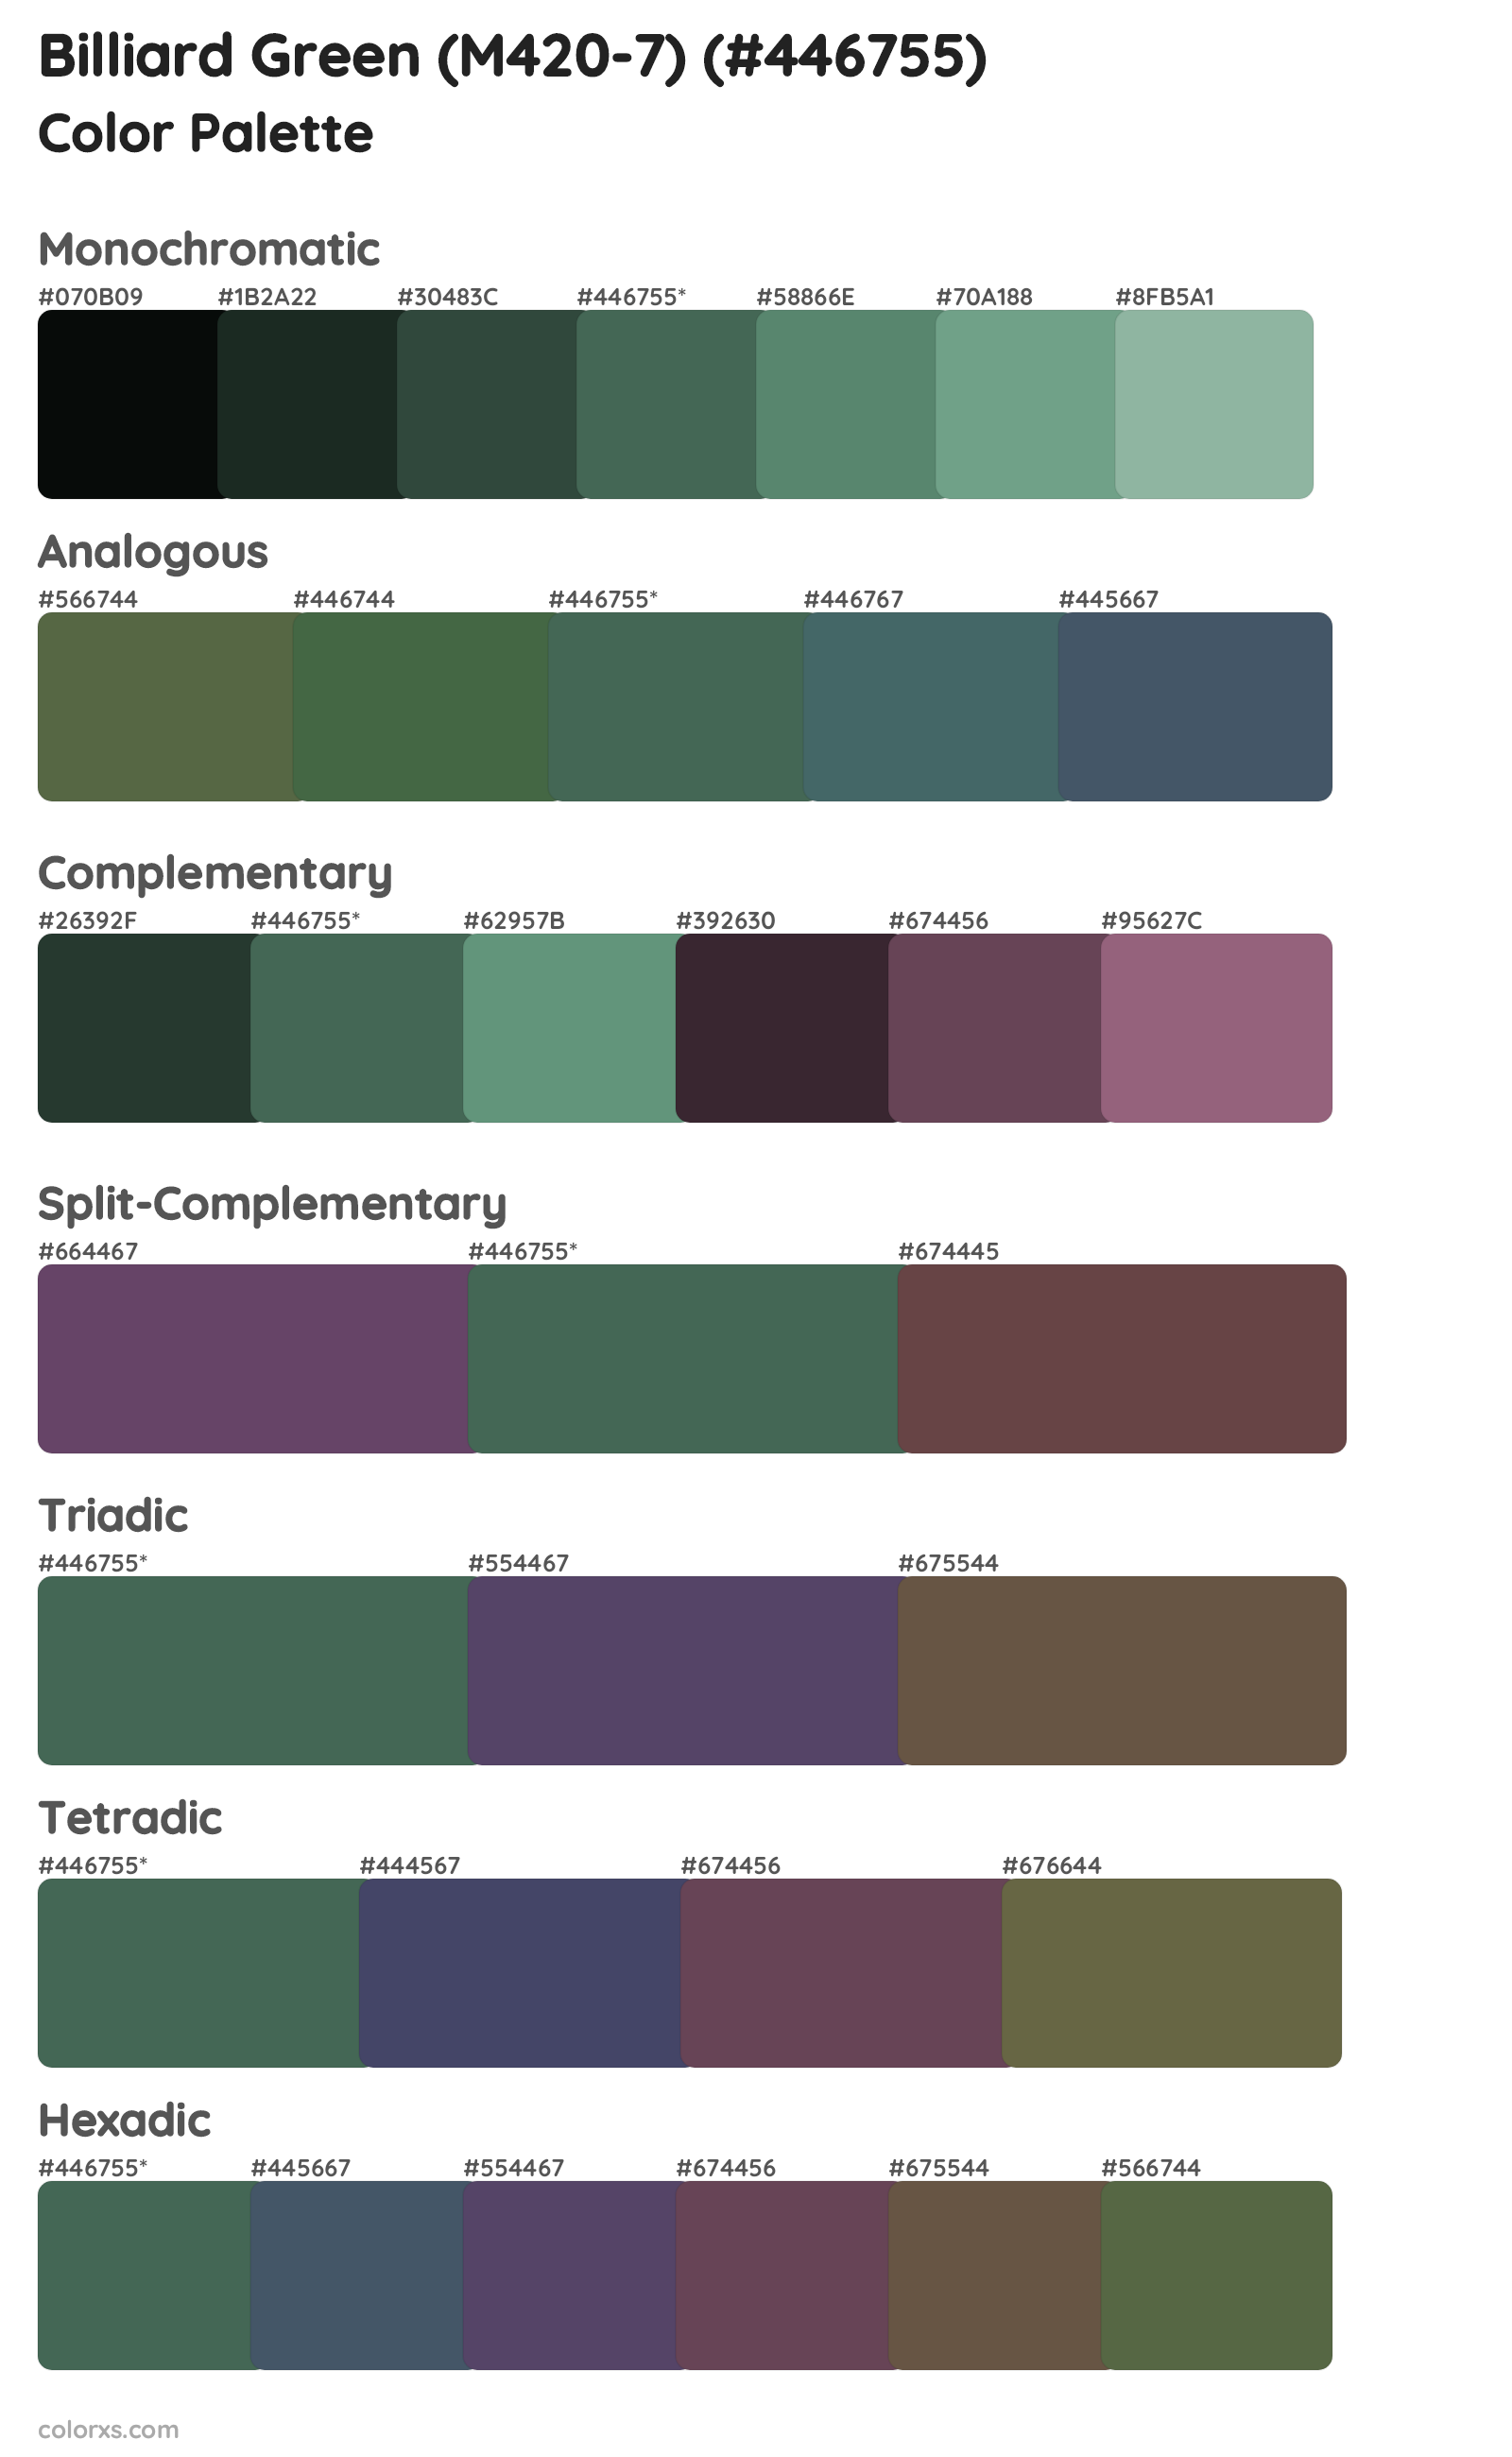 Billiard Green (M420-7) Color Scheme Palettes